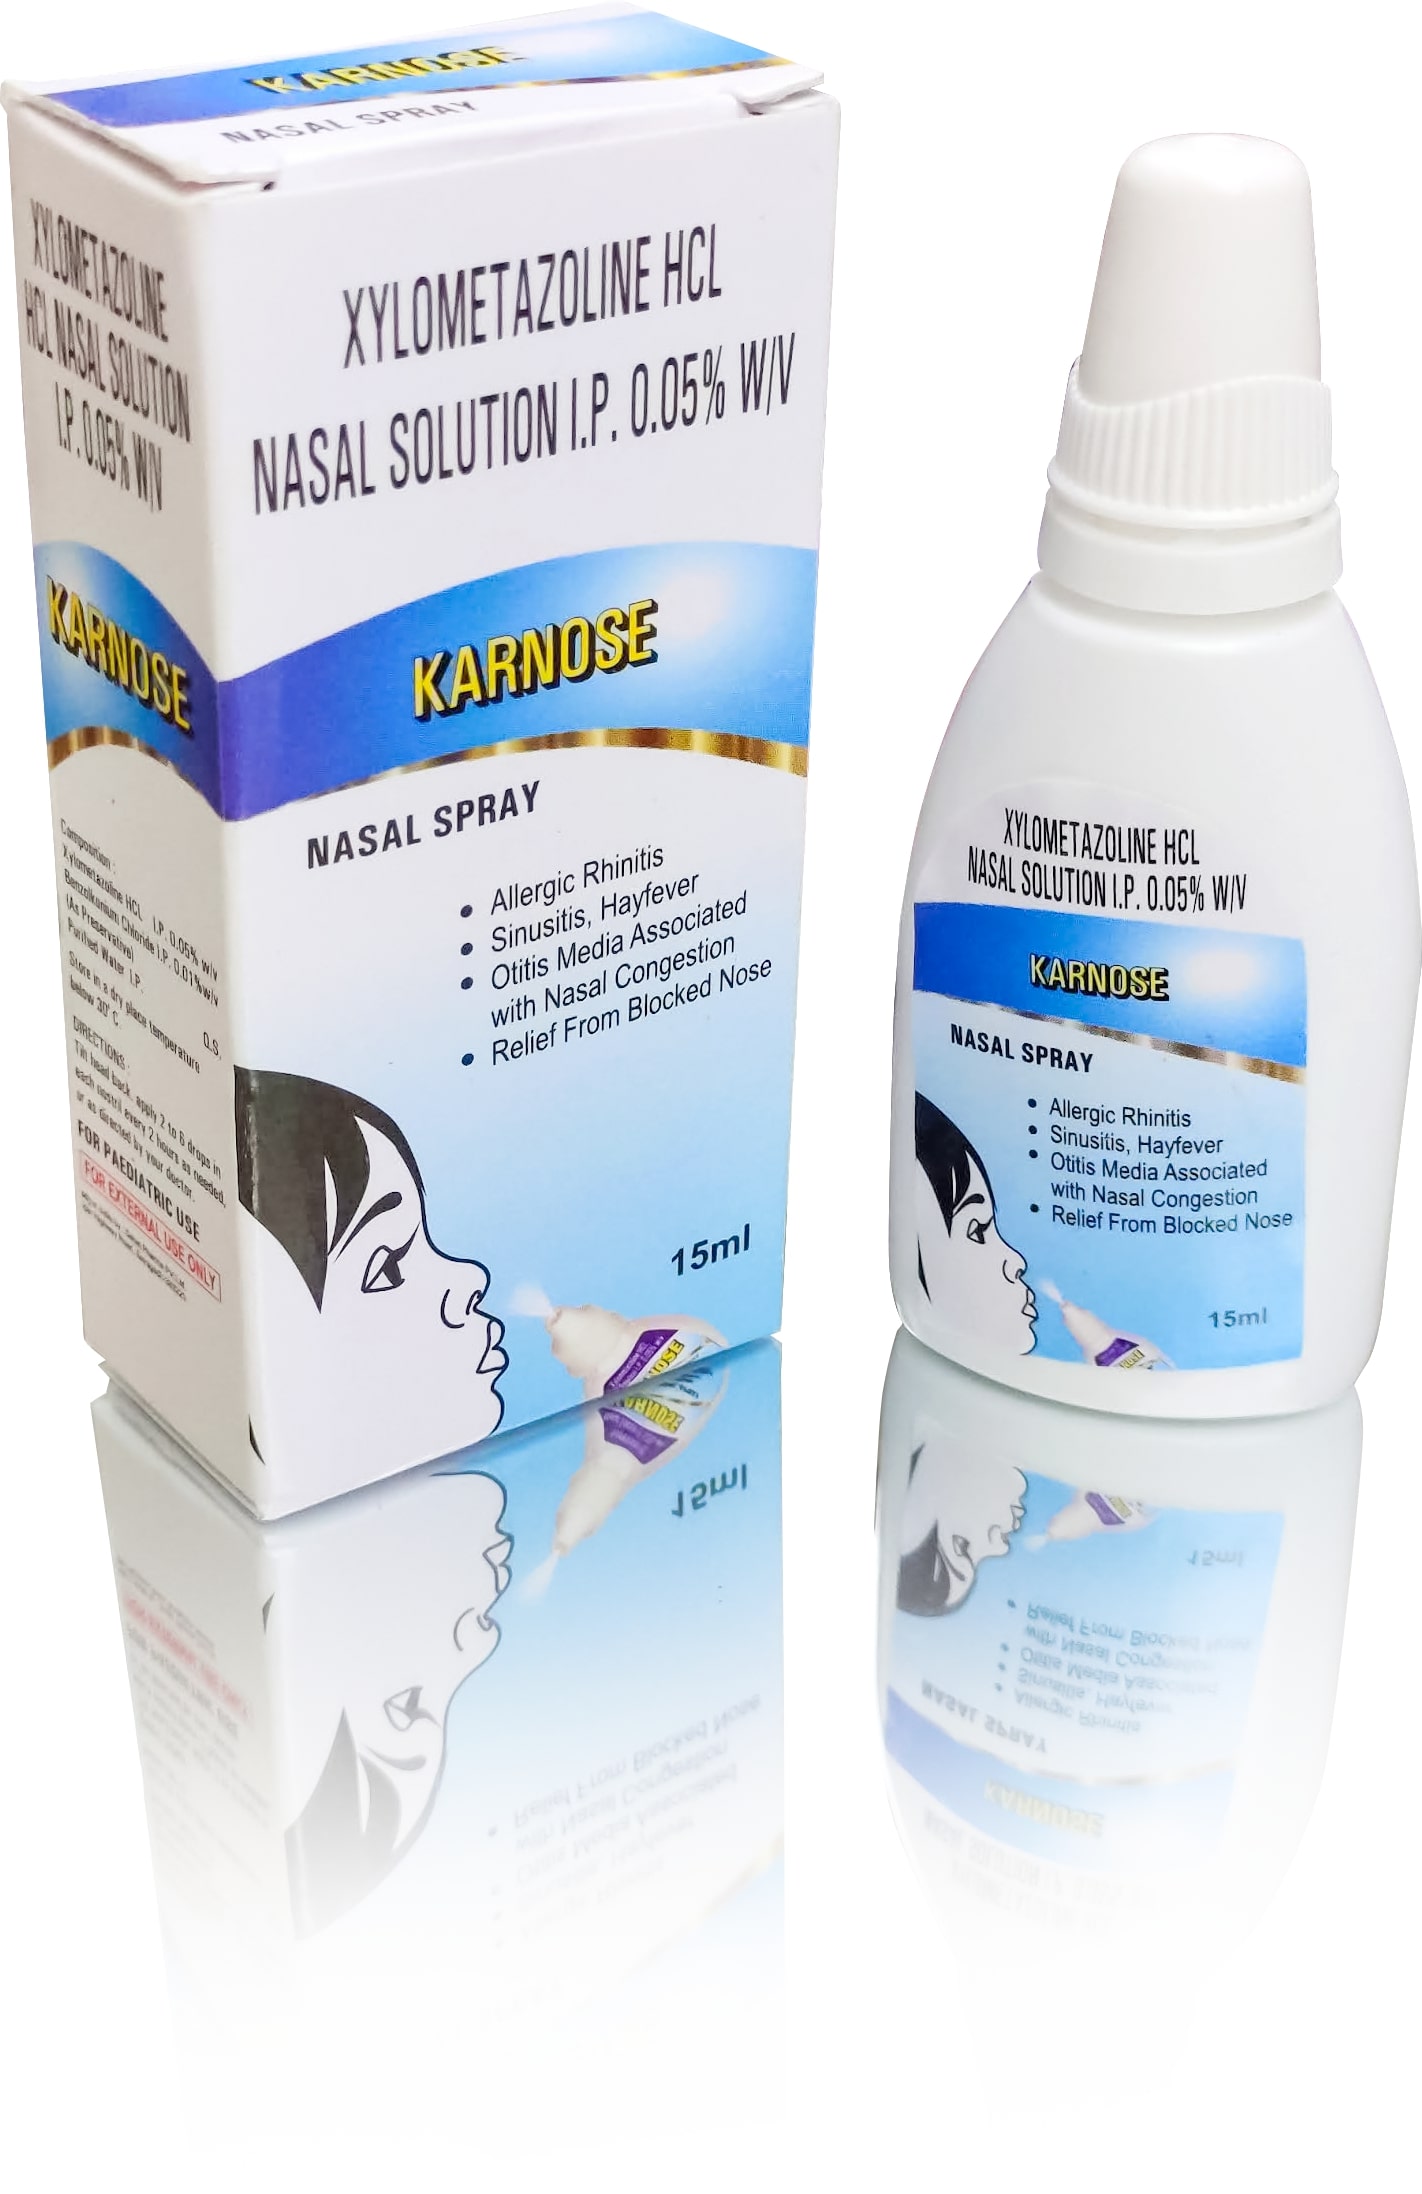 Karnose nasal spray.jpg